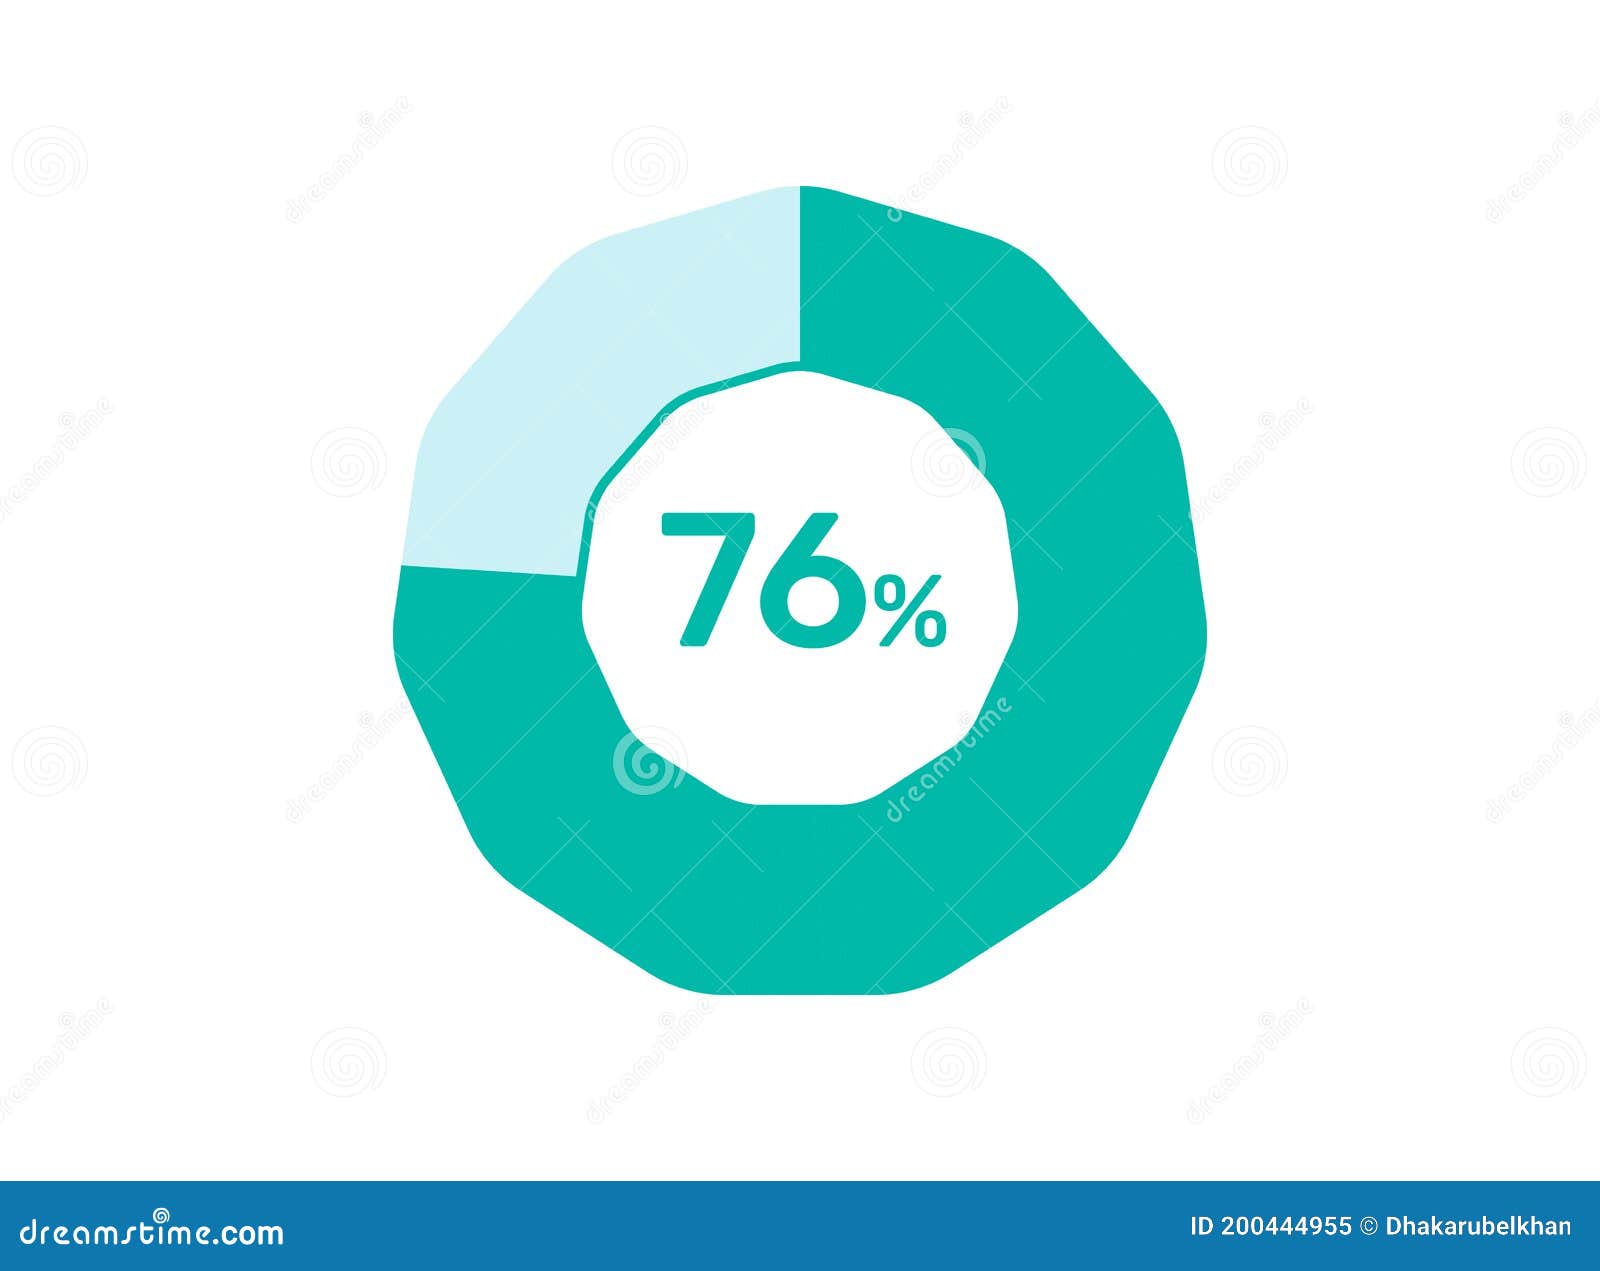 76 Percentage, Circle Pie Chart Showing 76 Percentage Diagram